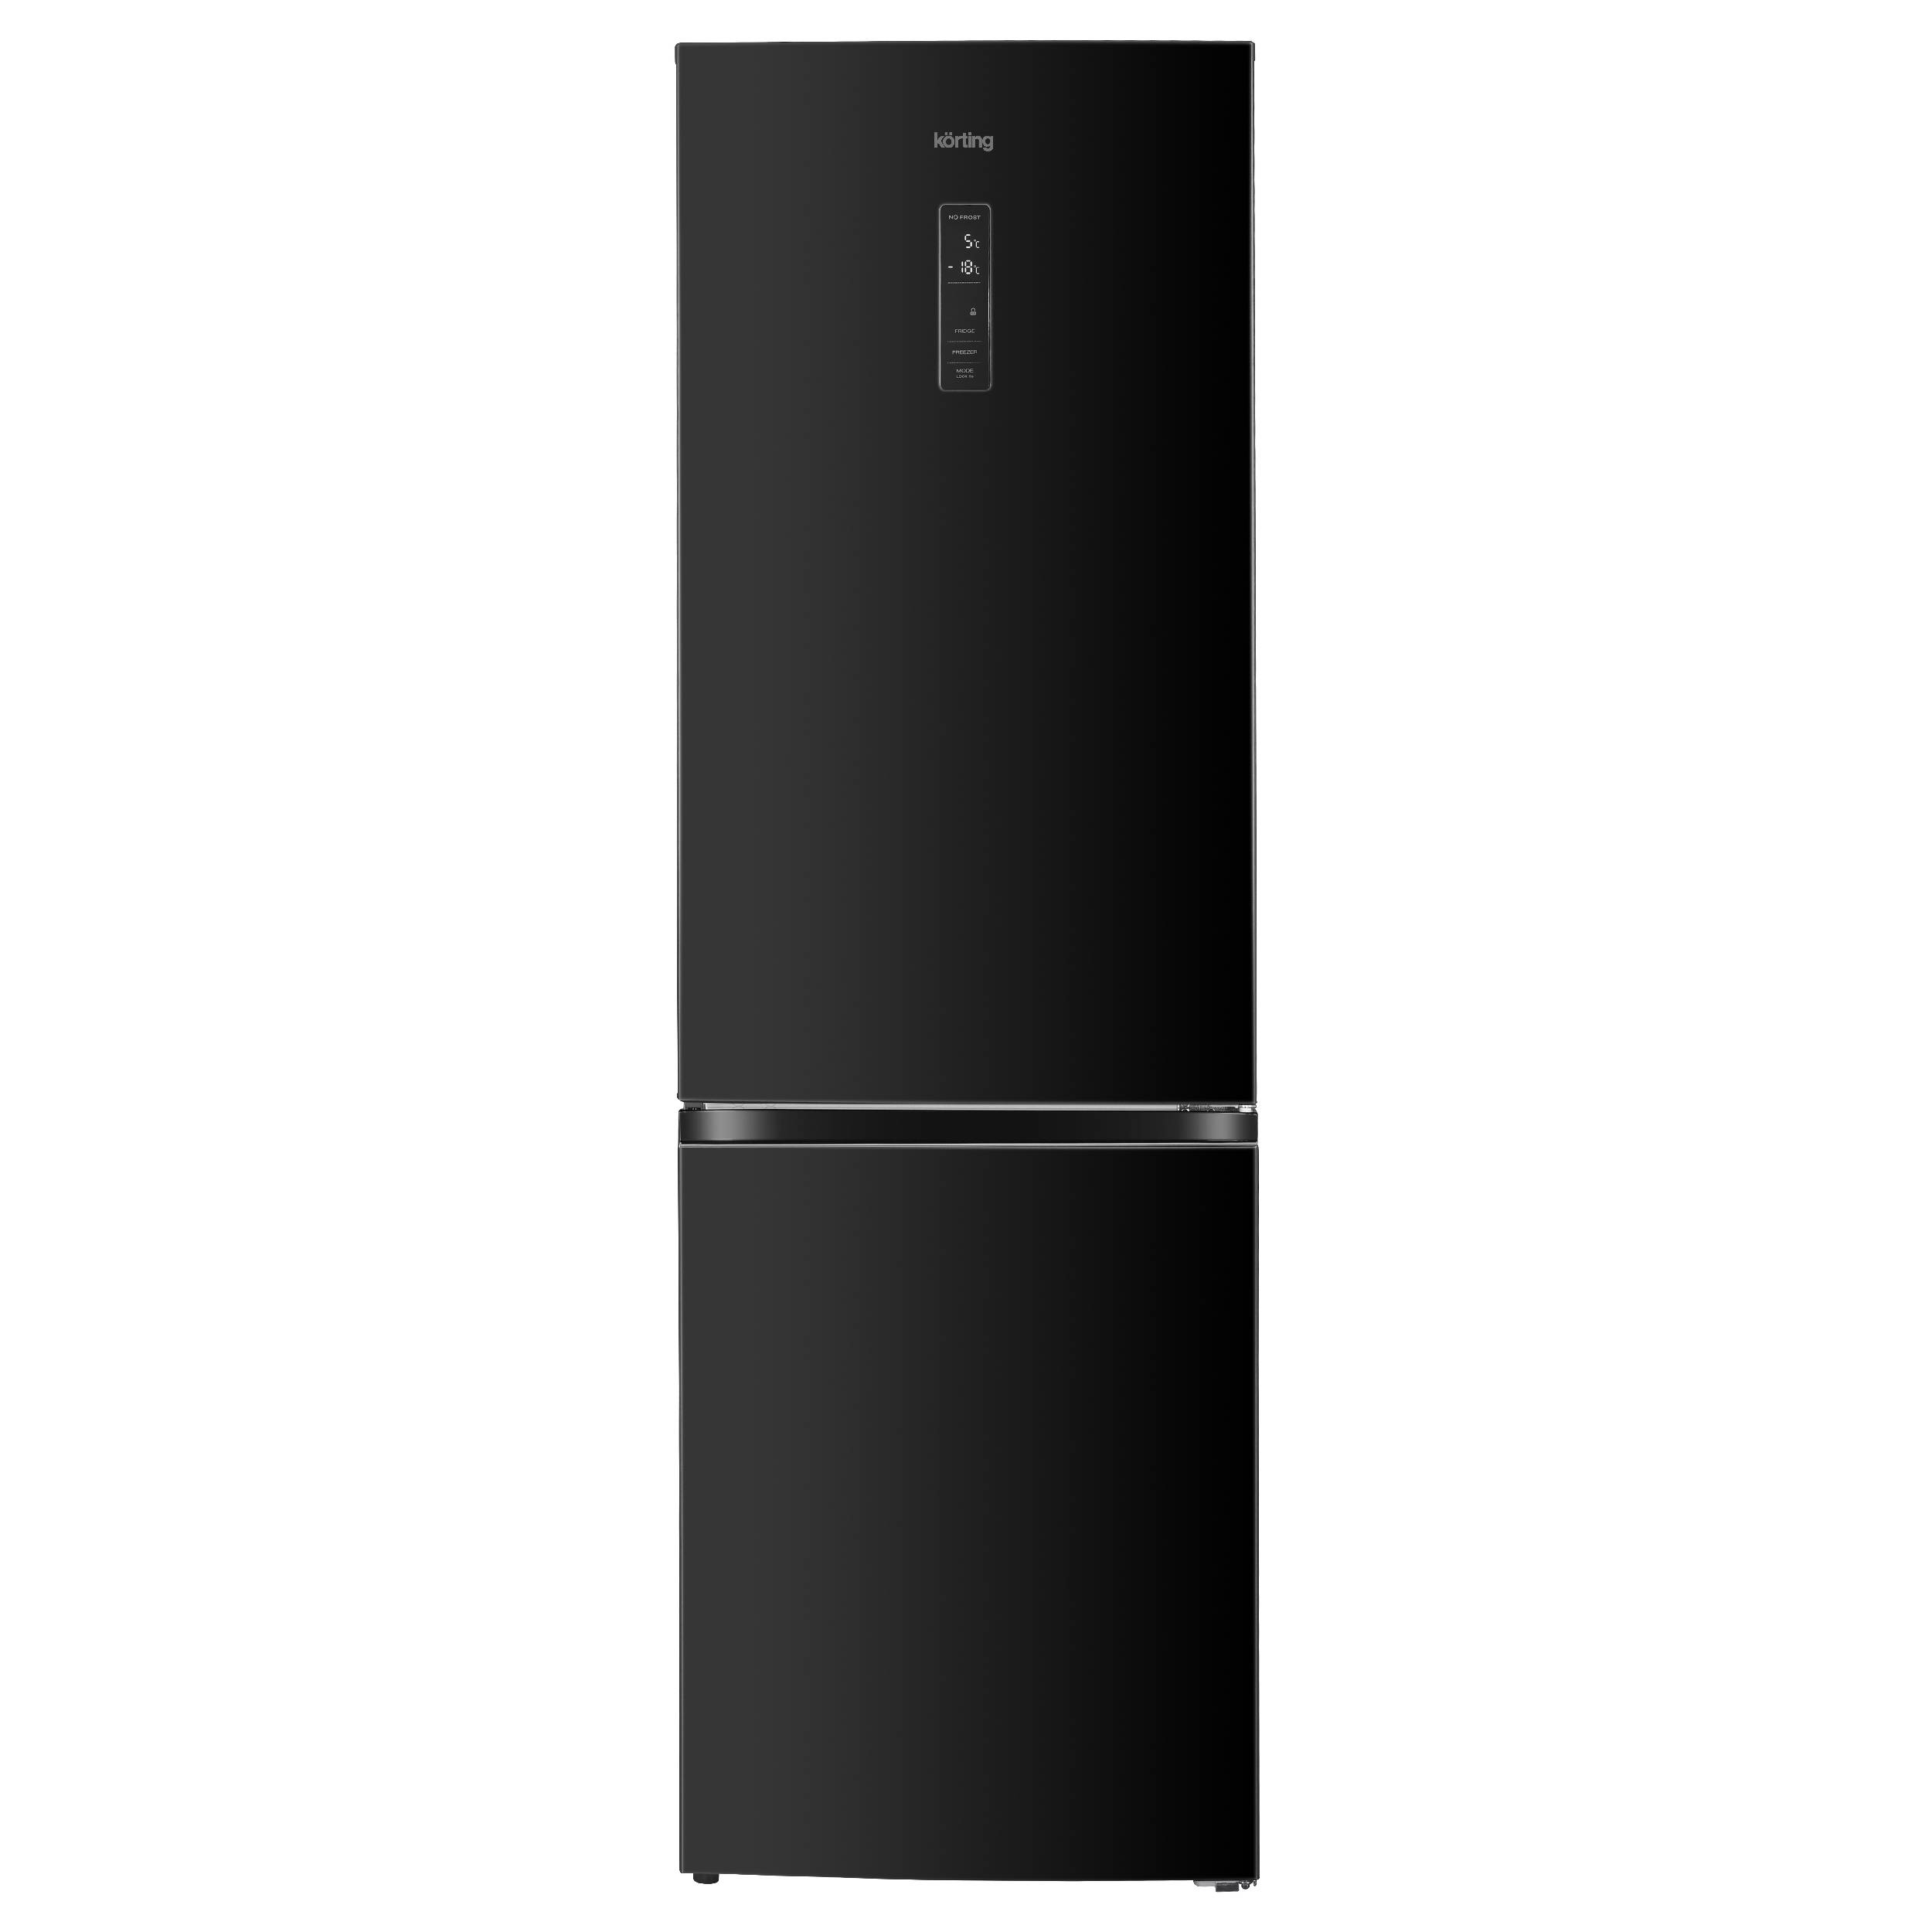 Холодильник Korting KNFC 62980 GN черный холодильник korting knfc 62980 gn